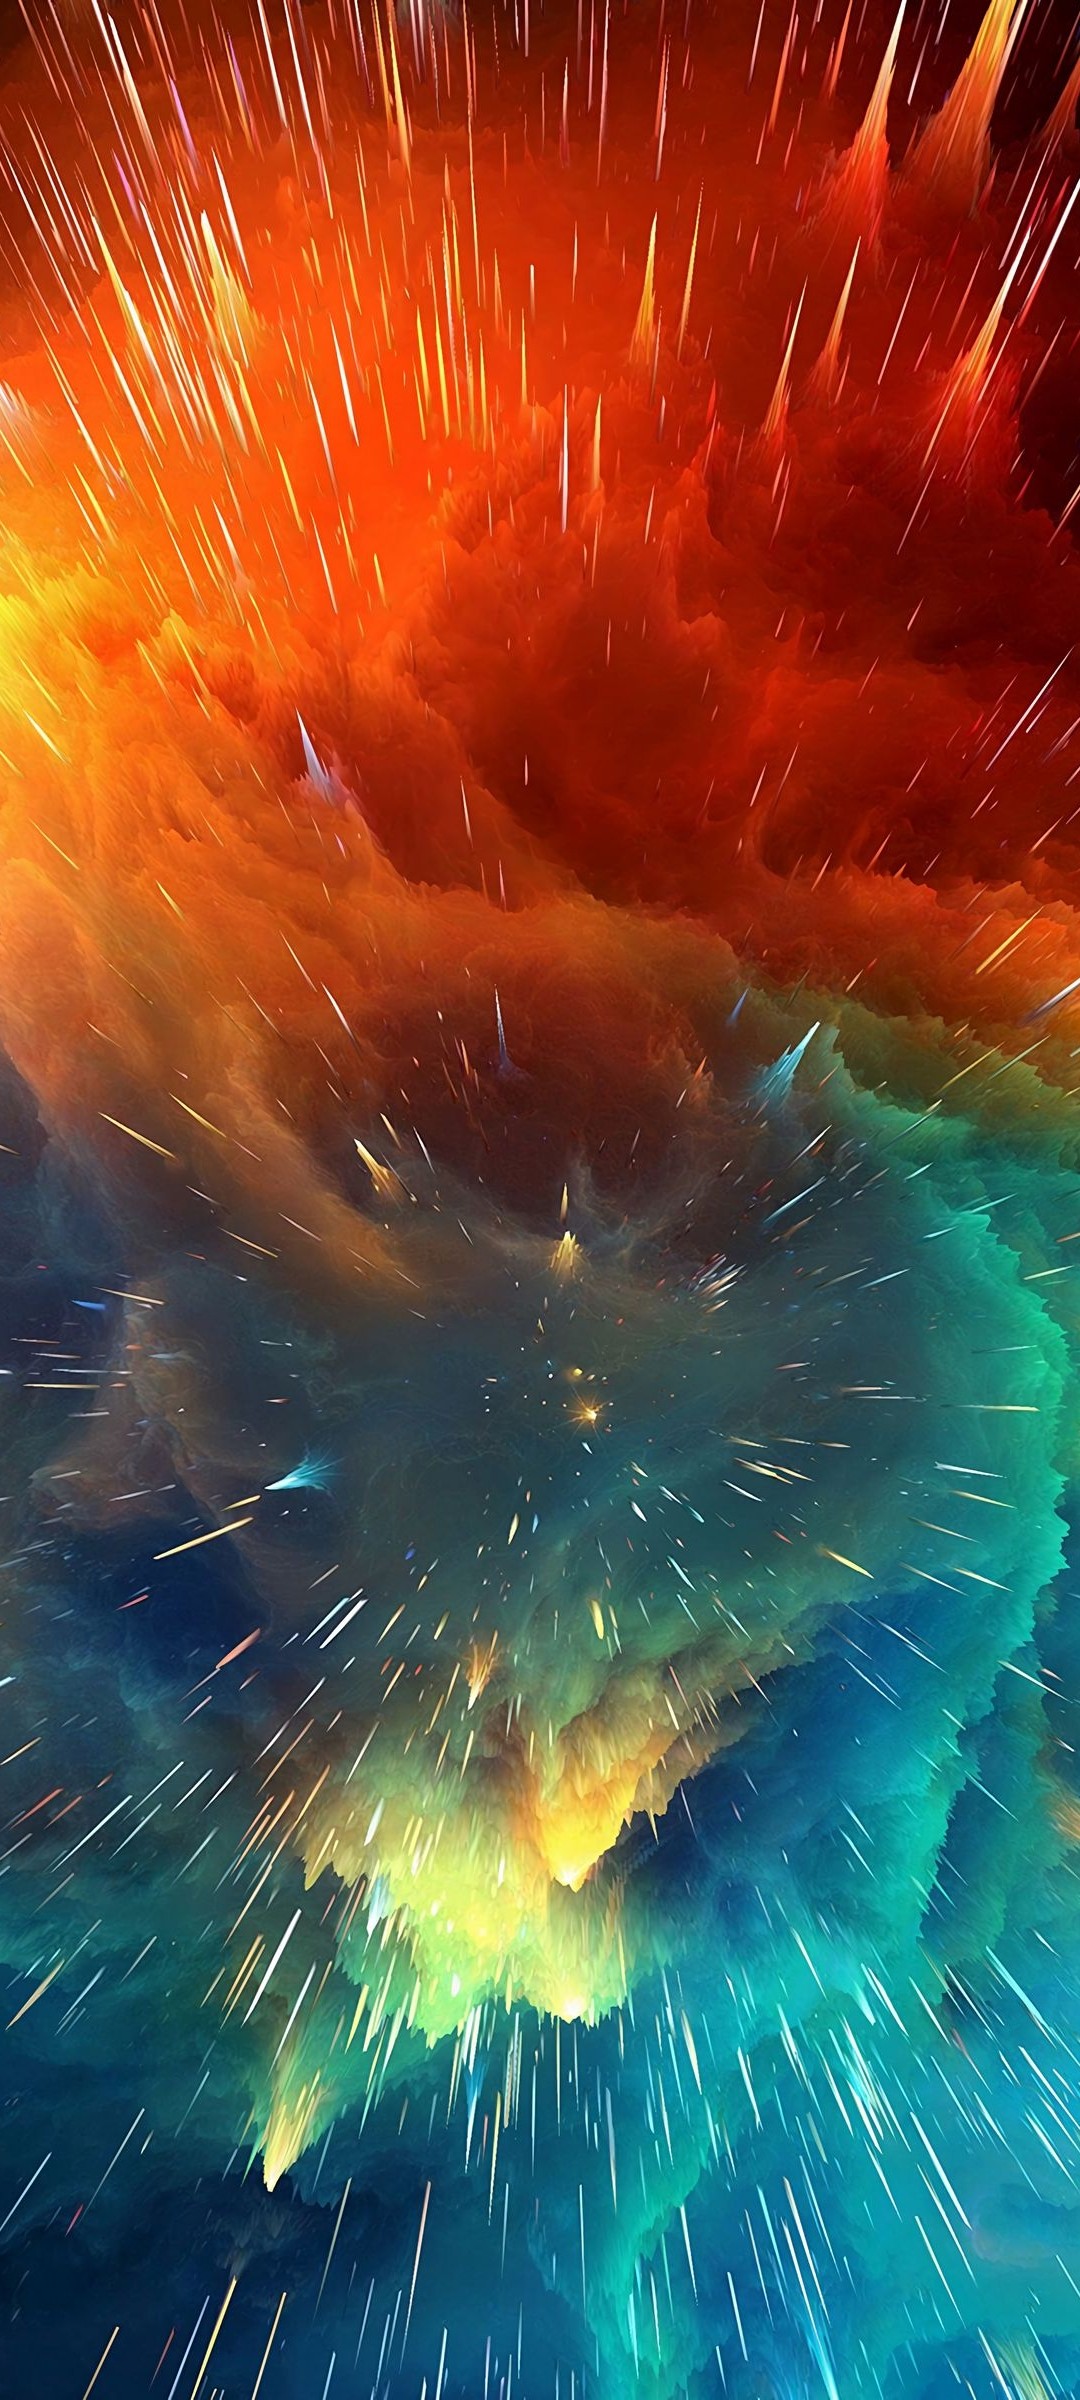 Rainbow Galaxy Bright Wallpaper Full HD by RainbowChipsette on DeviantArt